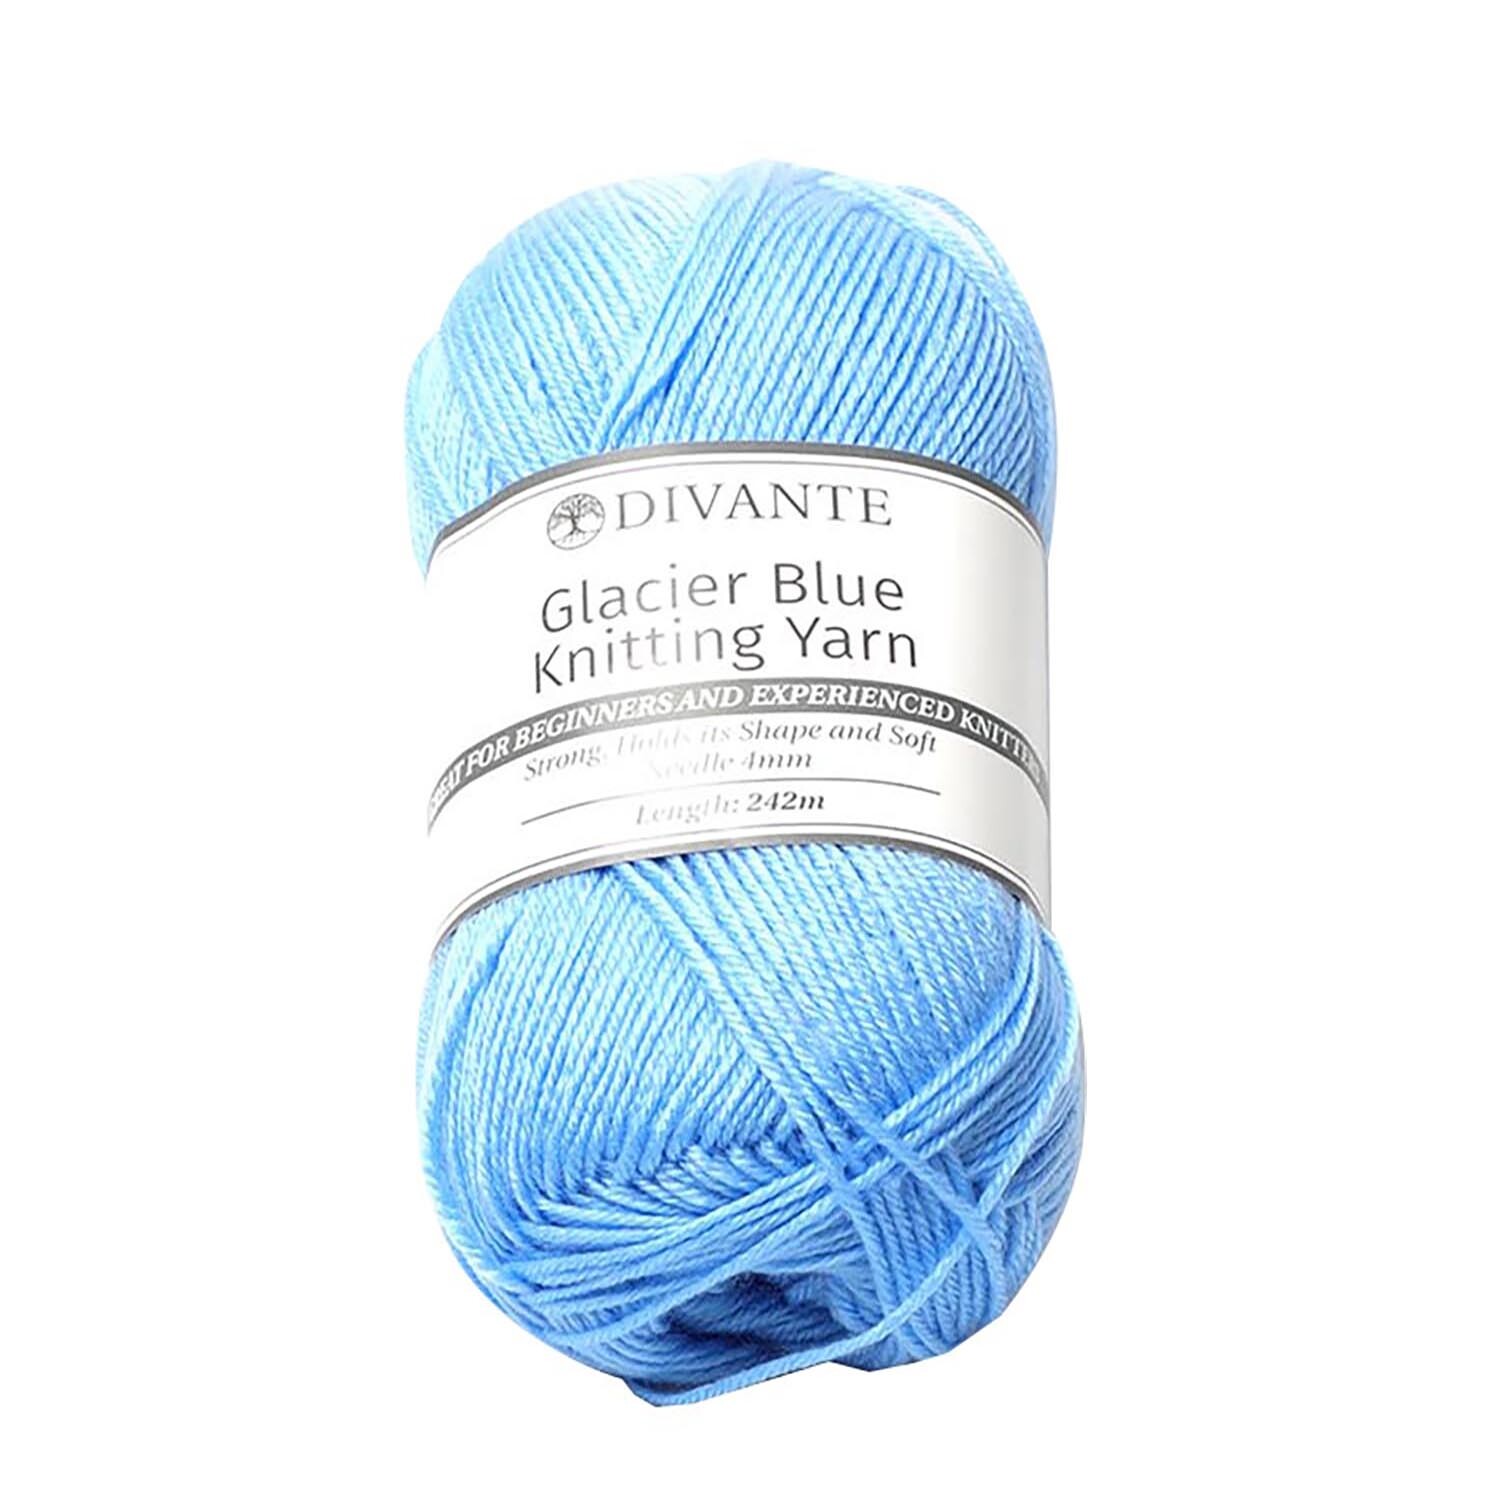 Divante Basic Knitting Yarn - Glacier Blue Image